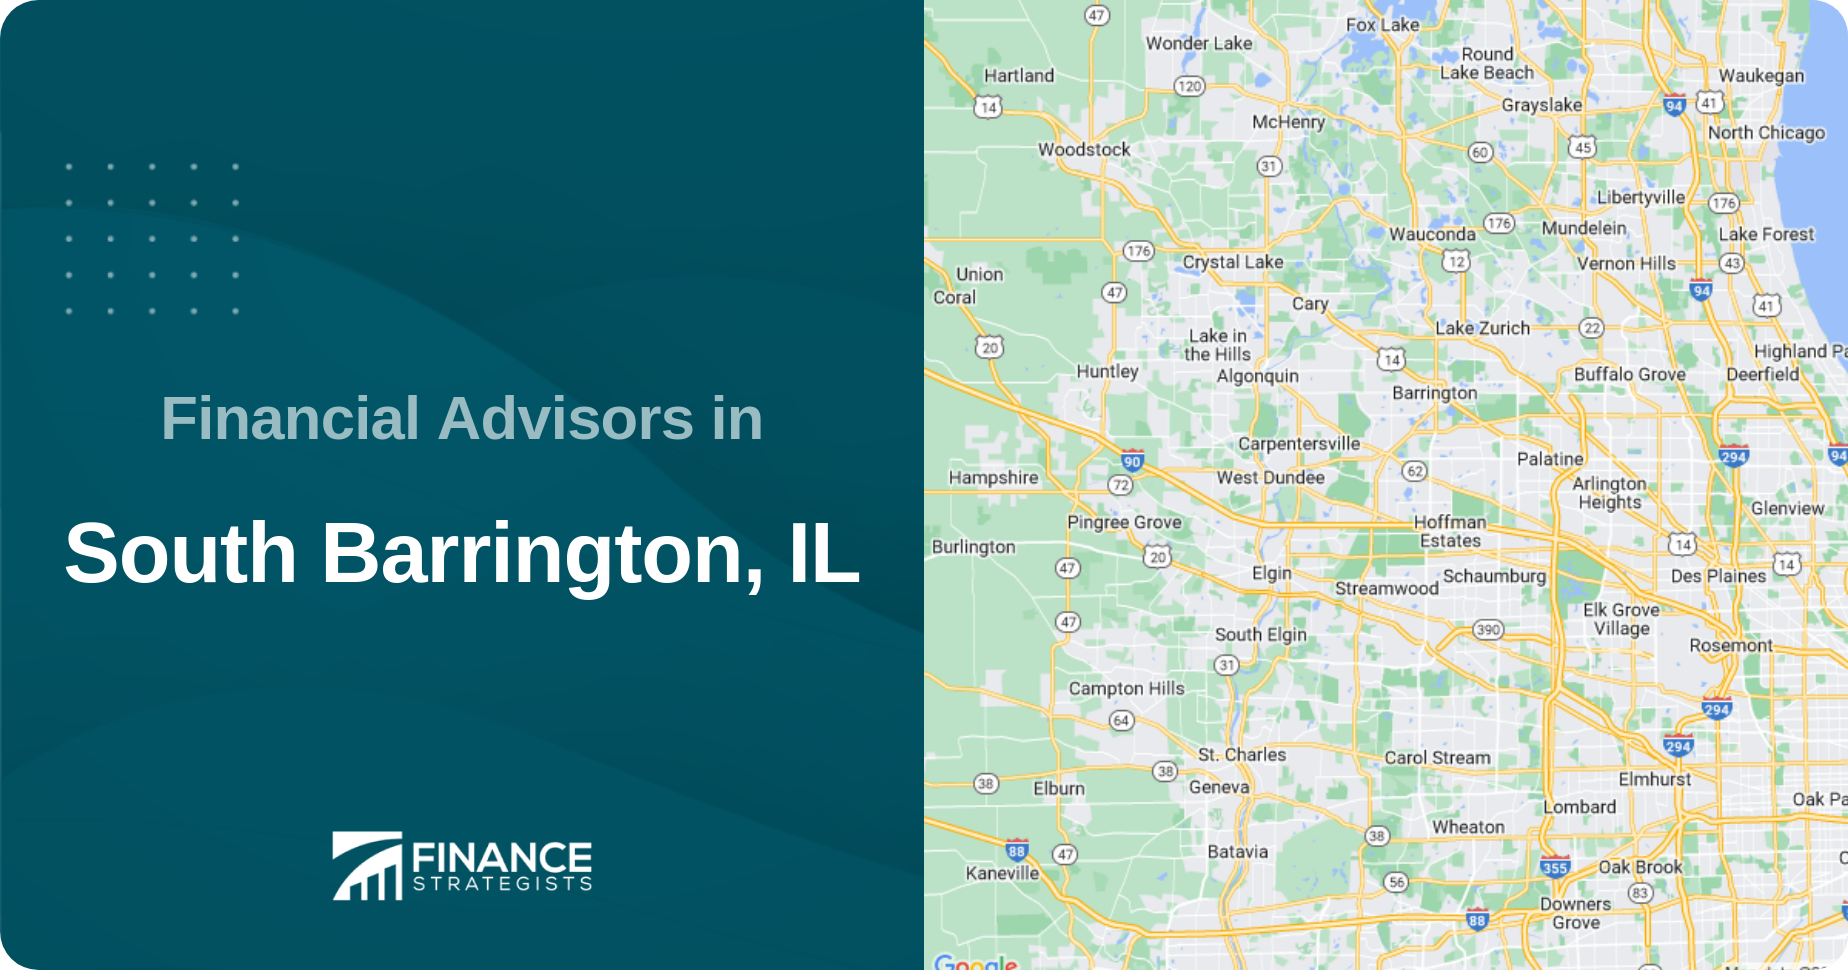 Financial Advisors in South Barrington, IL